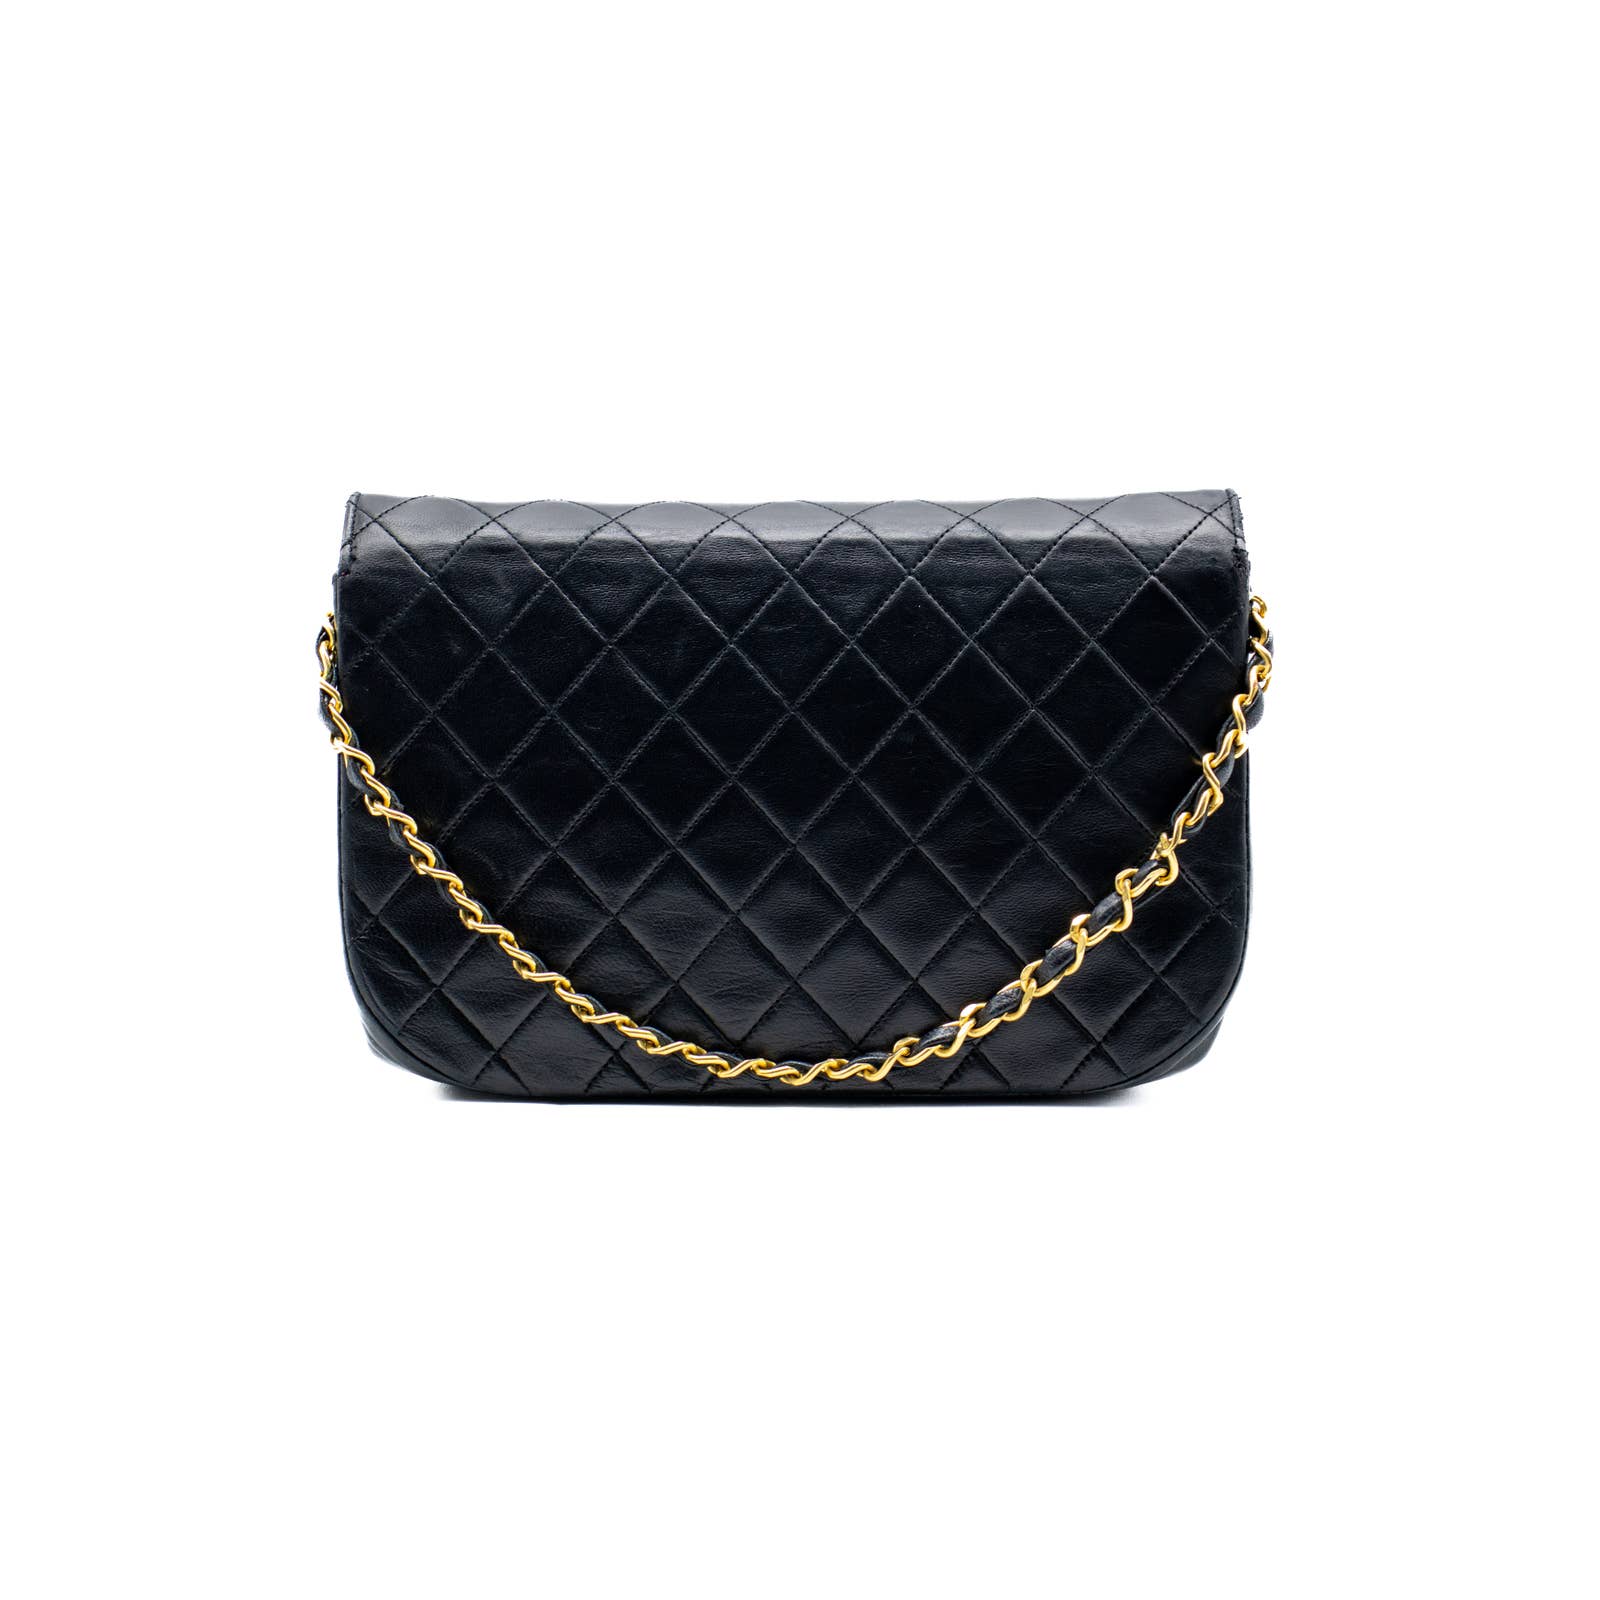 Chanel Quilted Leather Halfmoon Handbag